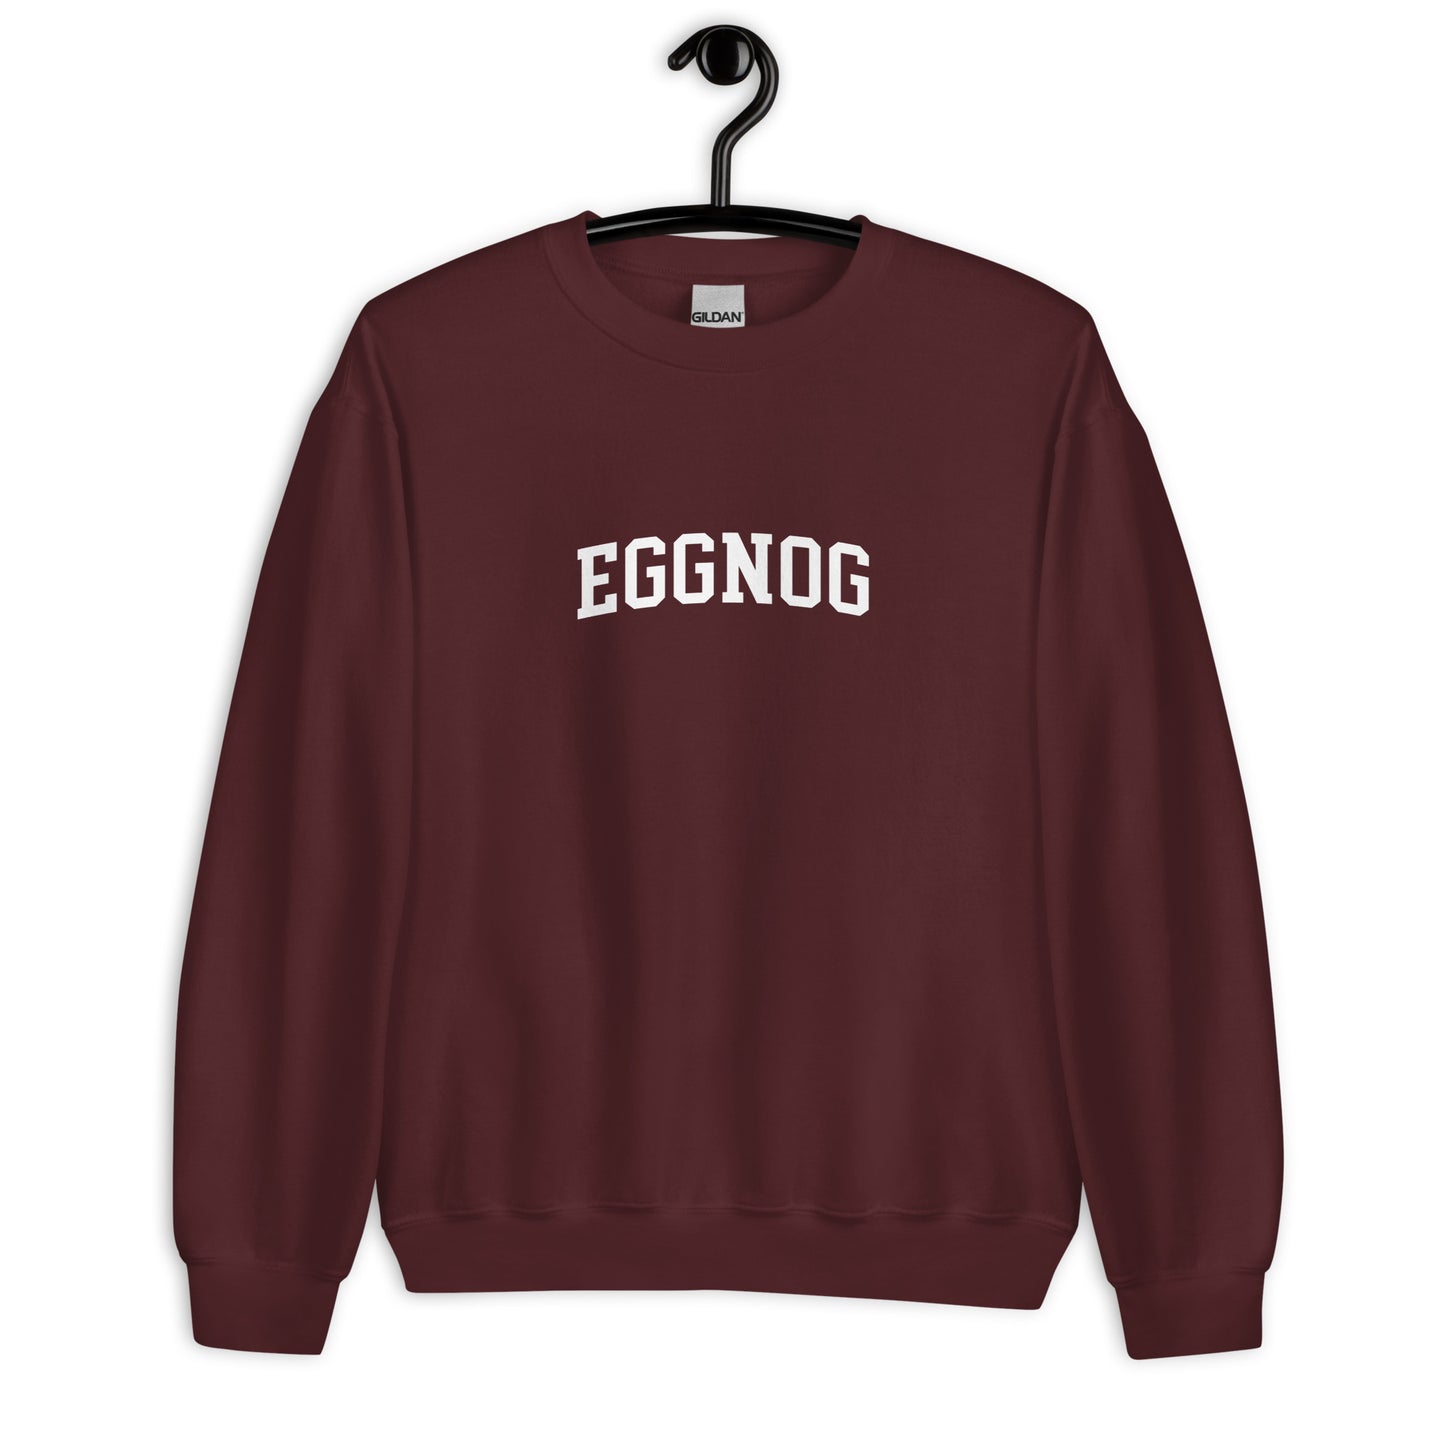 Eggnog Sweatshirt - Arched Font